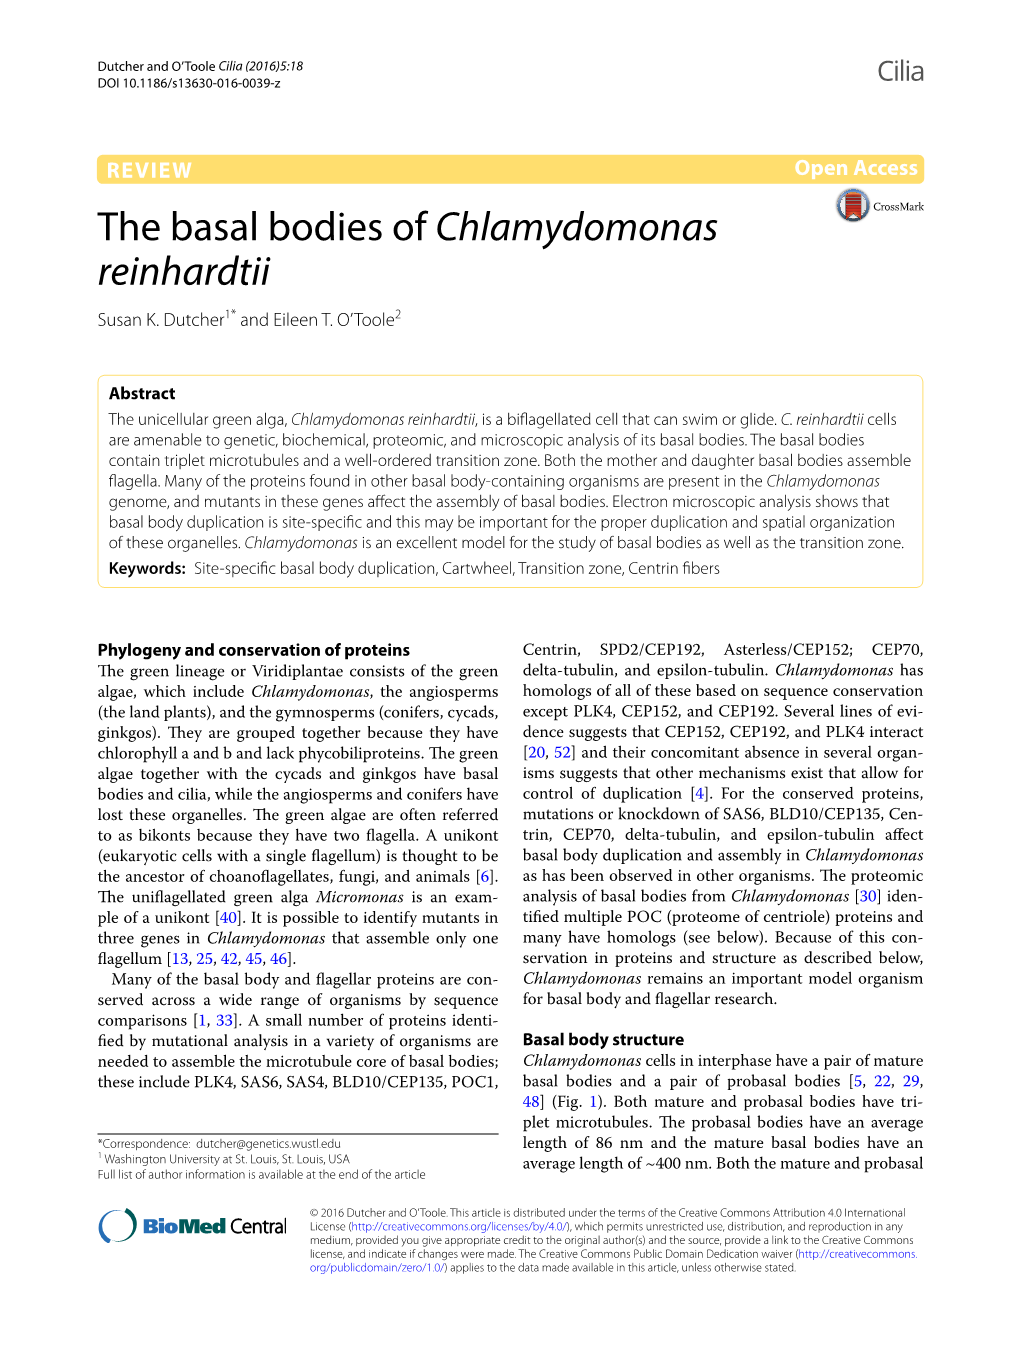 The Basal Bodies of Chlamydomonas Reinhardtii Susan K